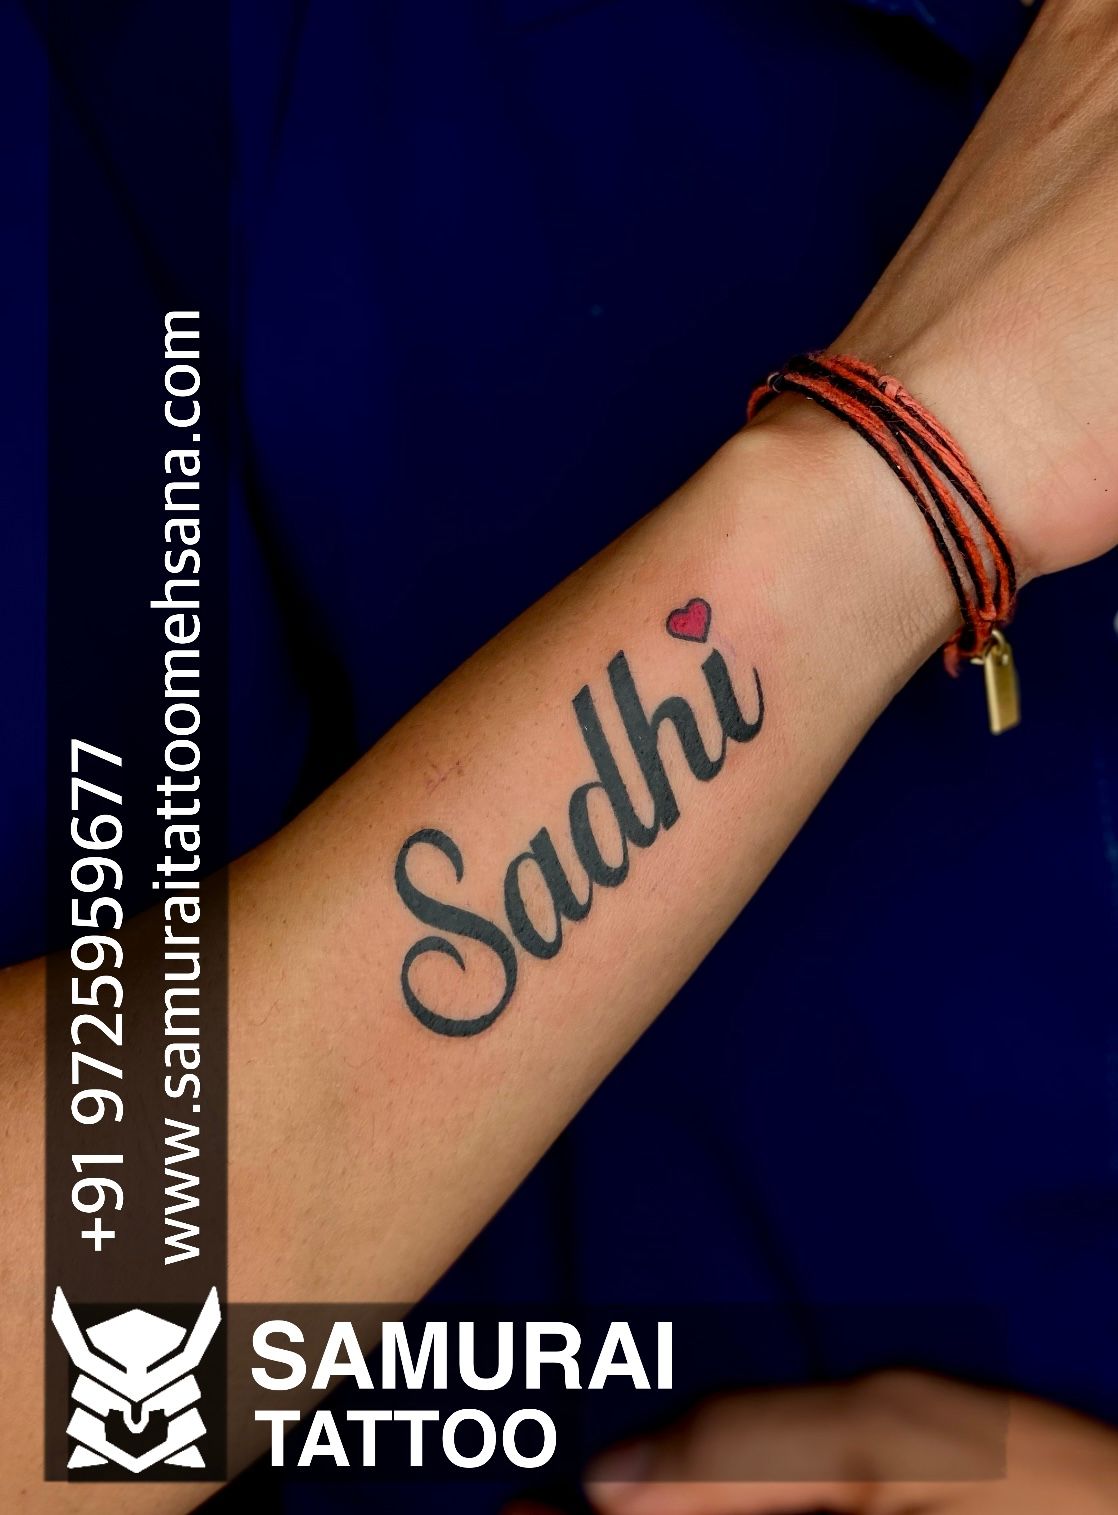 Crazy ink tattoo  Body piercing on Twitter WORD TATTOO DESIGN By tattoo  artist Kunal Vegad For more info visithttpstcoTi6PjbZCzZ  httpstcogcT6d2tSmt  Twitter